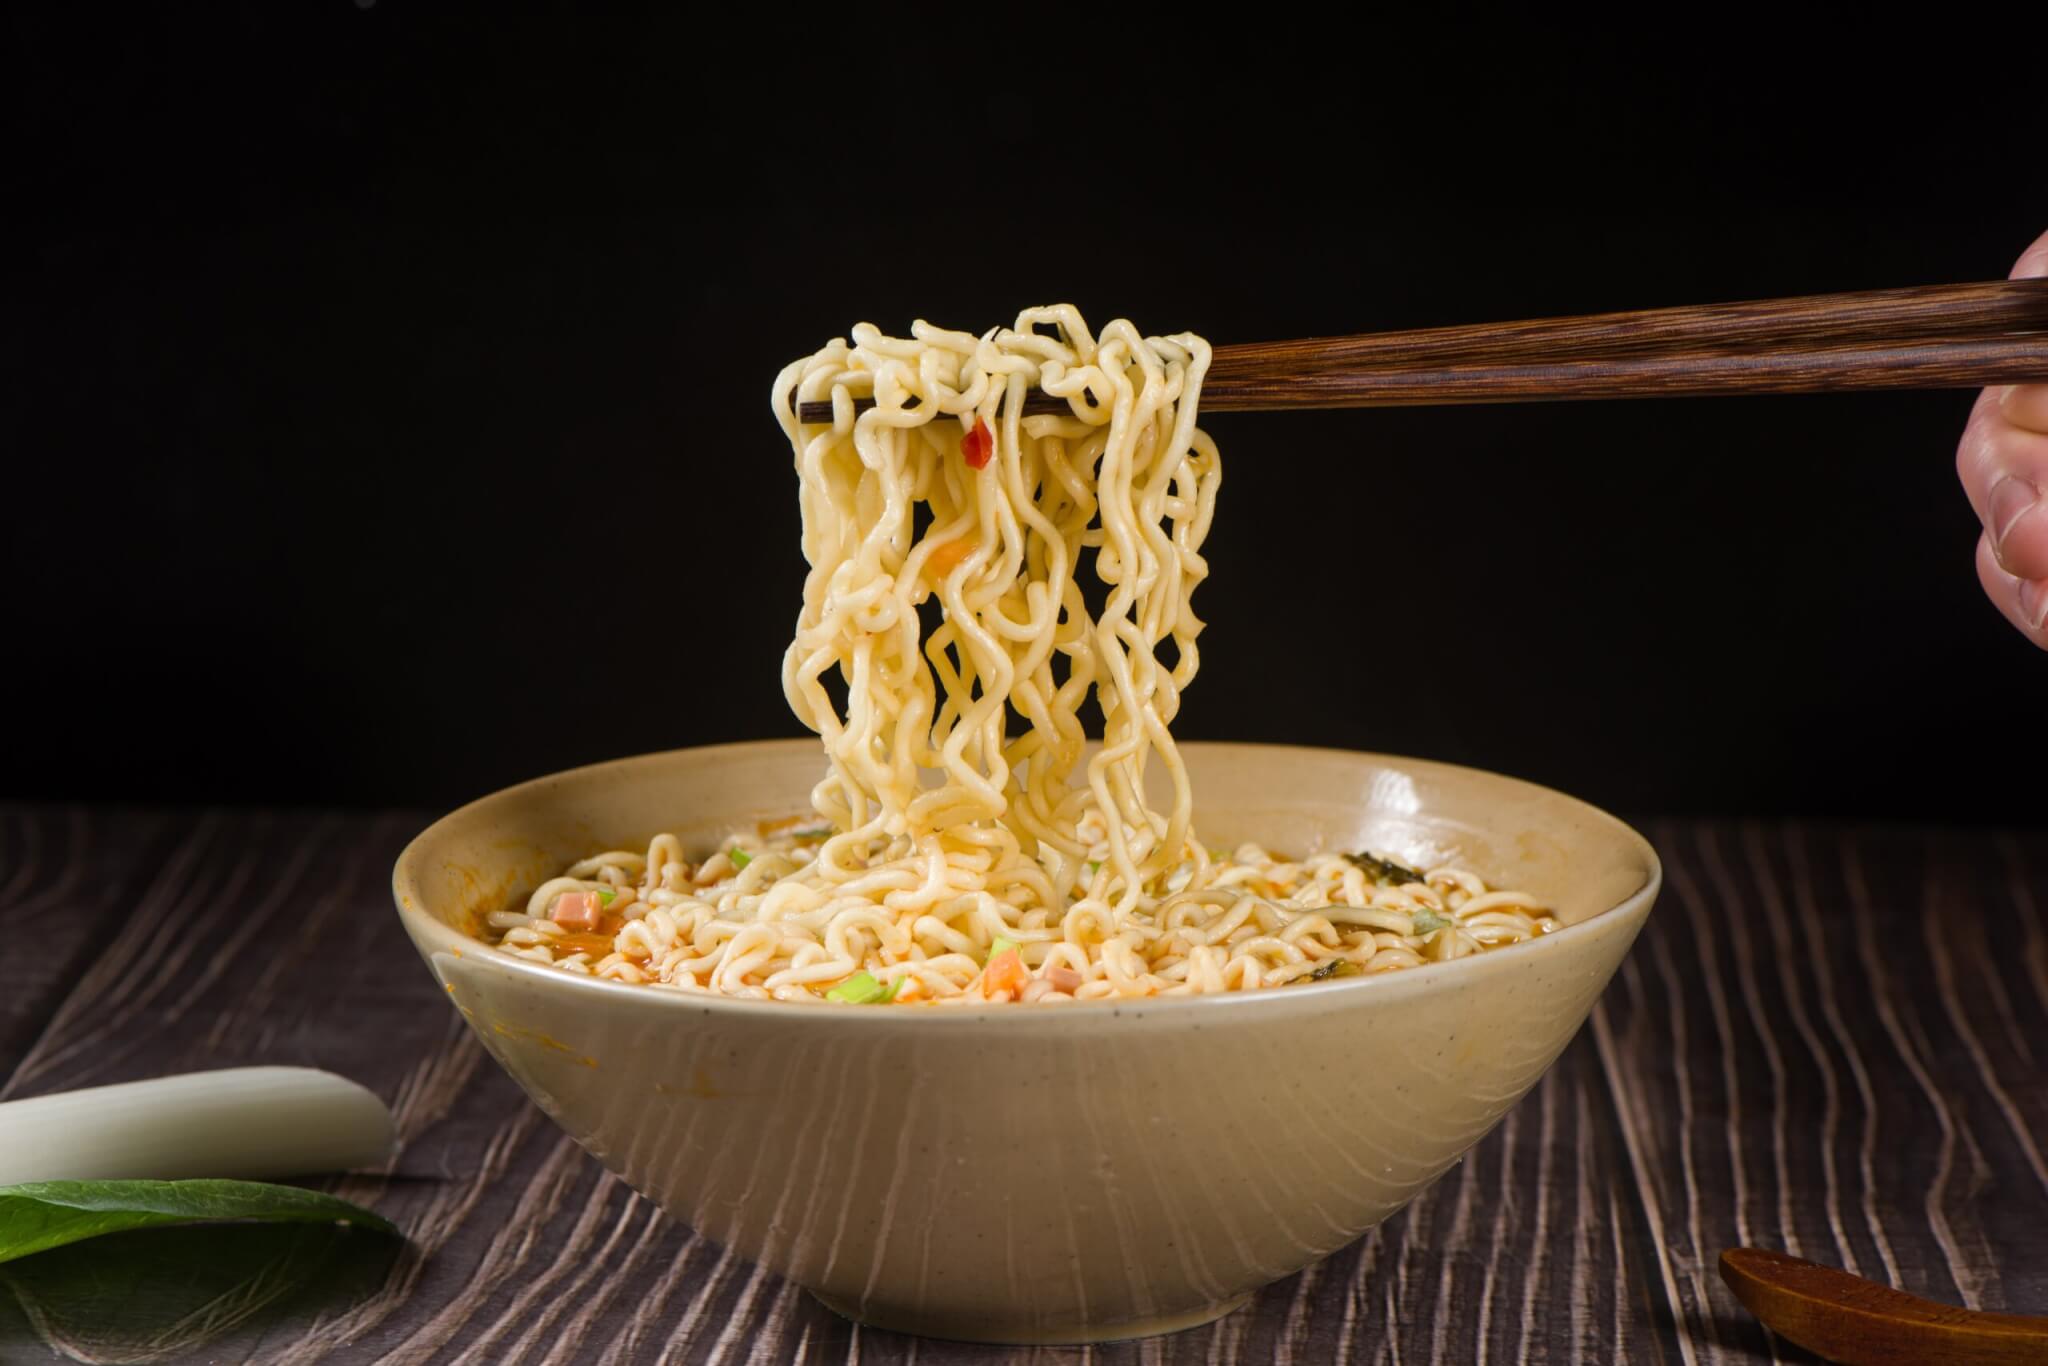 Ottogi Spicy Jin Ramen Korean Style Instant Noodles 4 Pack - World Market